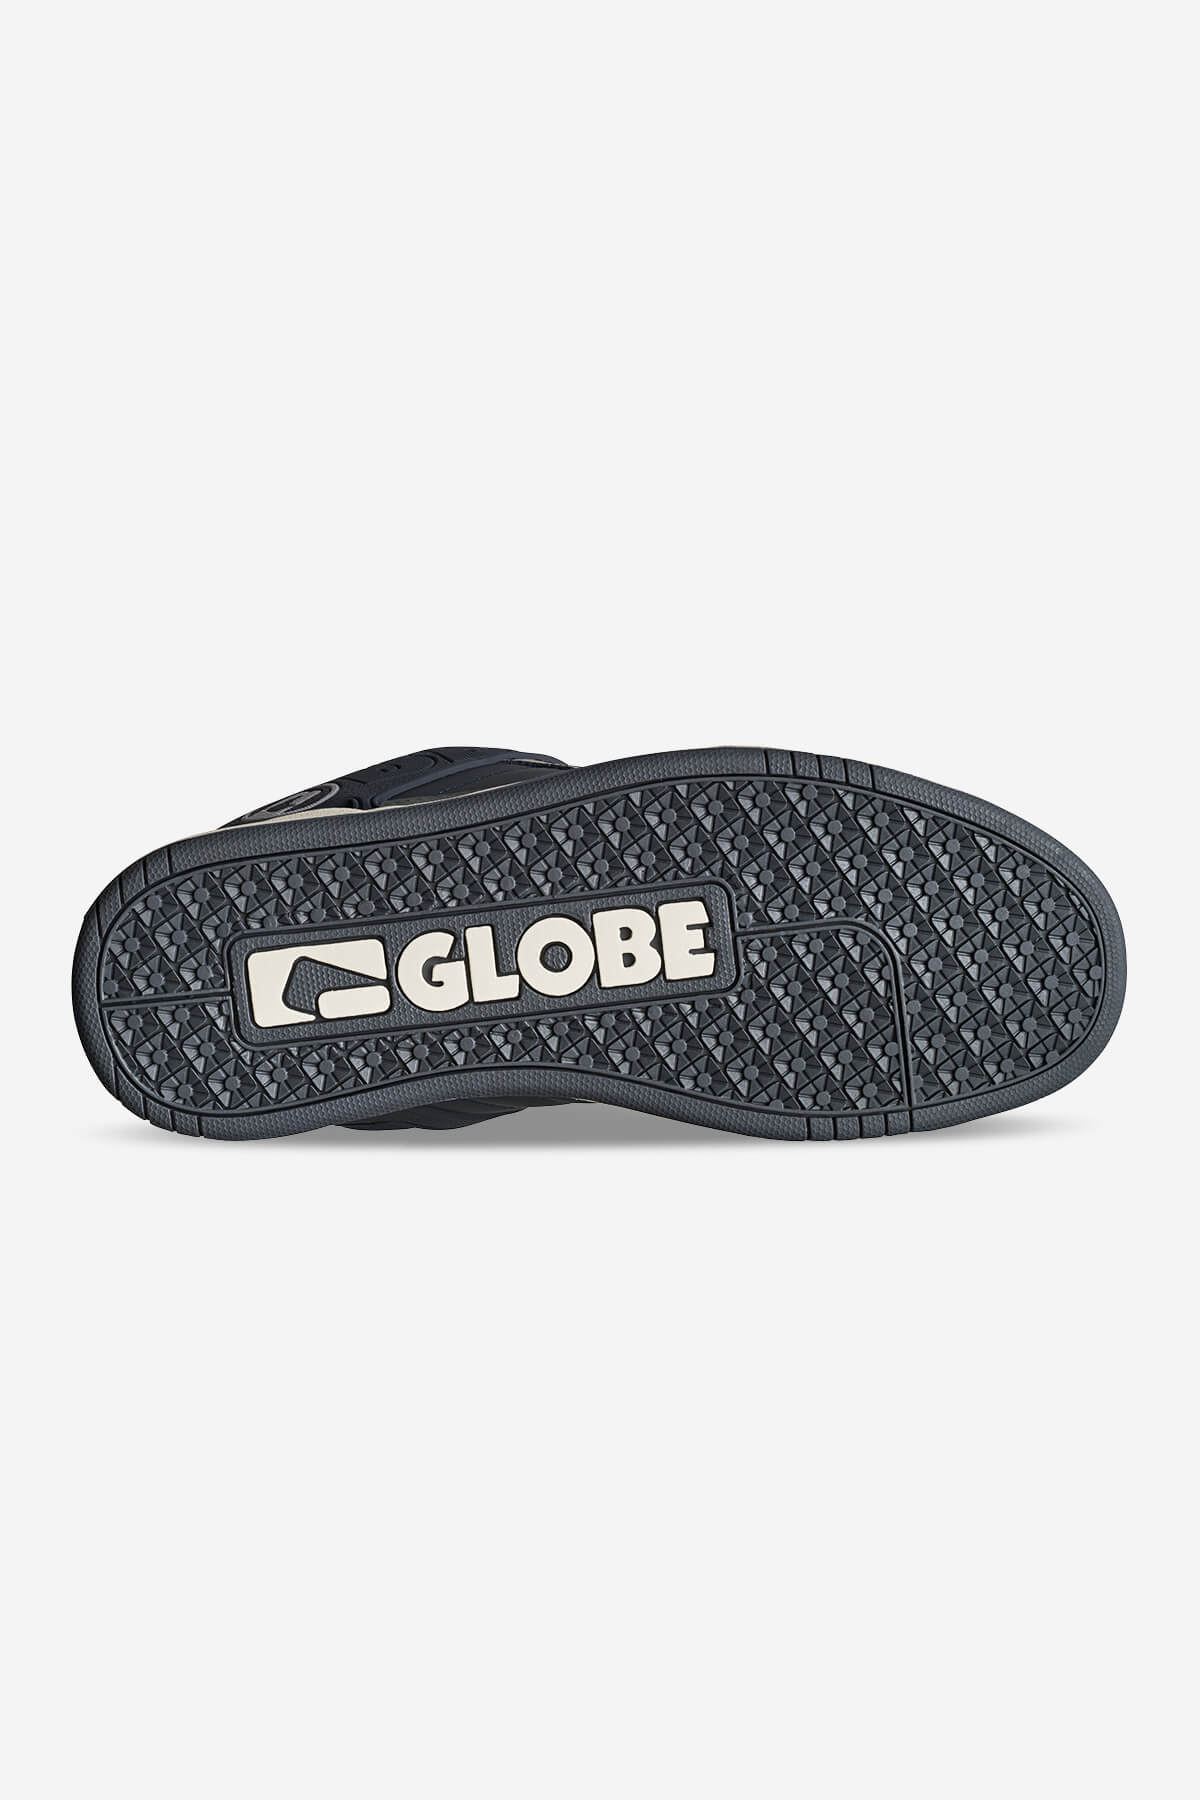 Globe - Tilt - Ebenholz/Charcoal - skateboard Schuhe